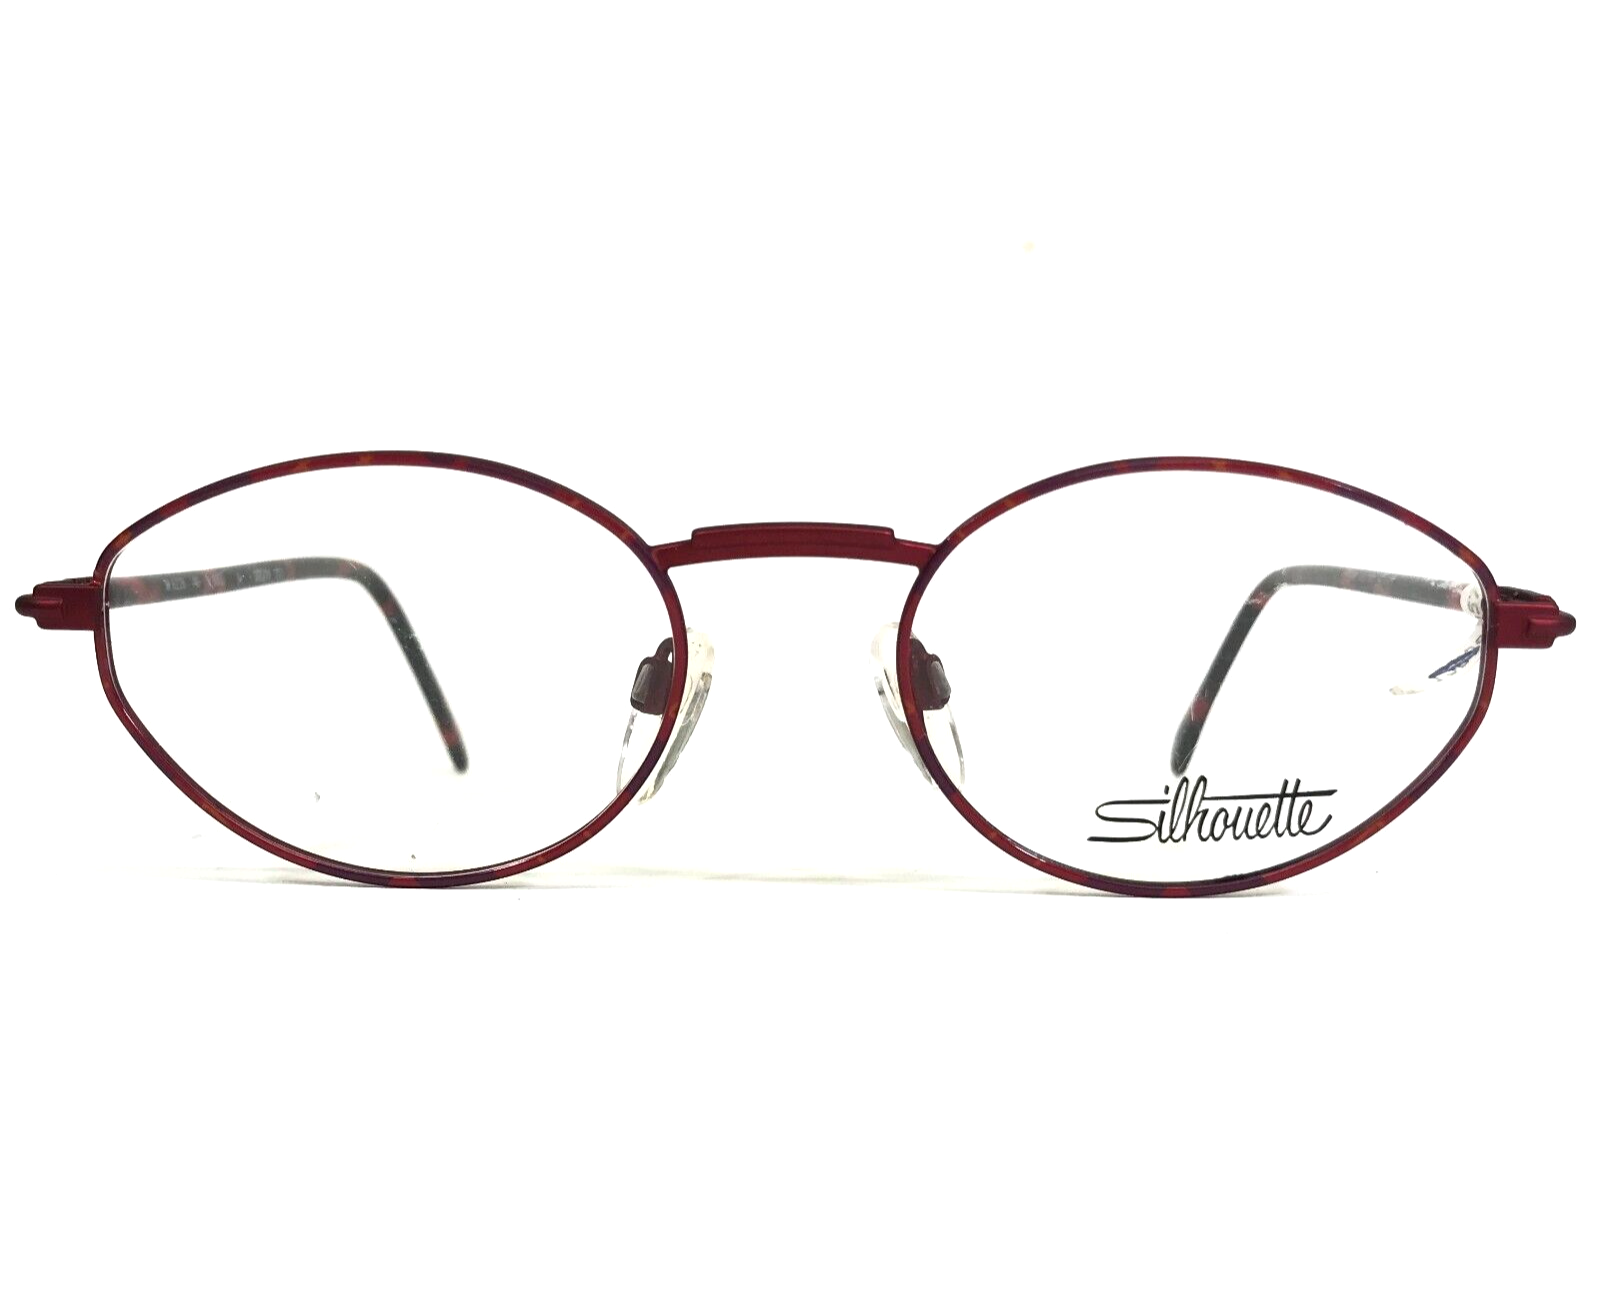 Primary image for Silhouette Eyeglasses Frames M 6228 /40 V6053 Black Matte Red Round 52-19-135